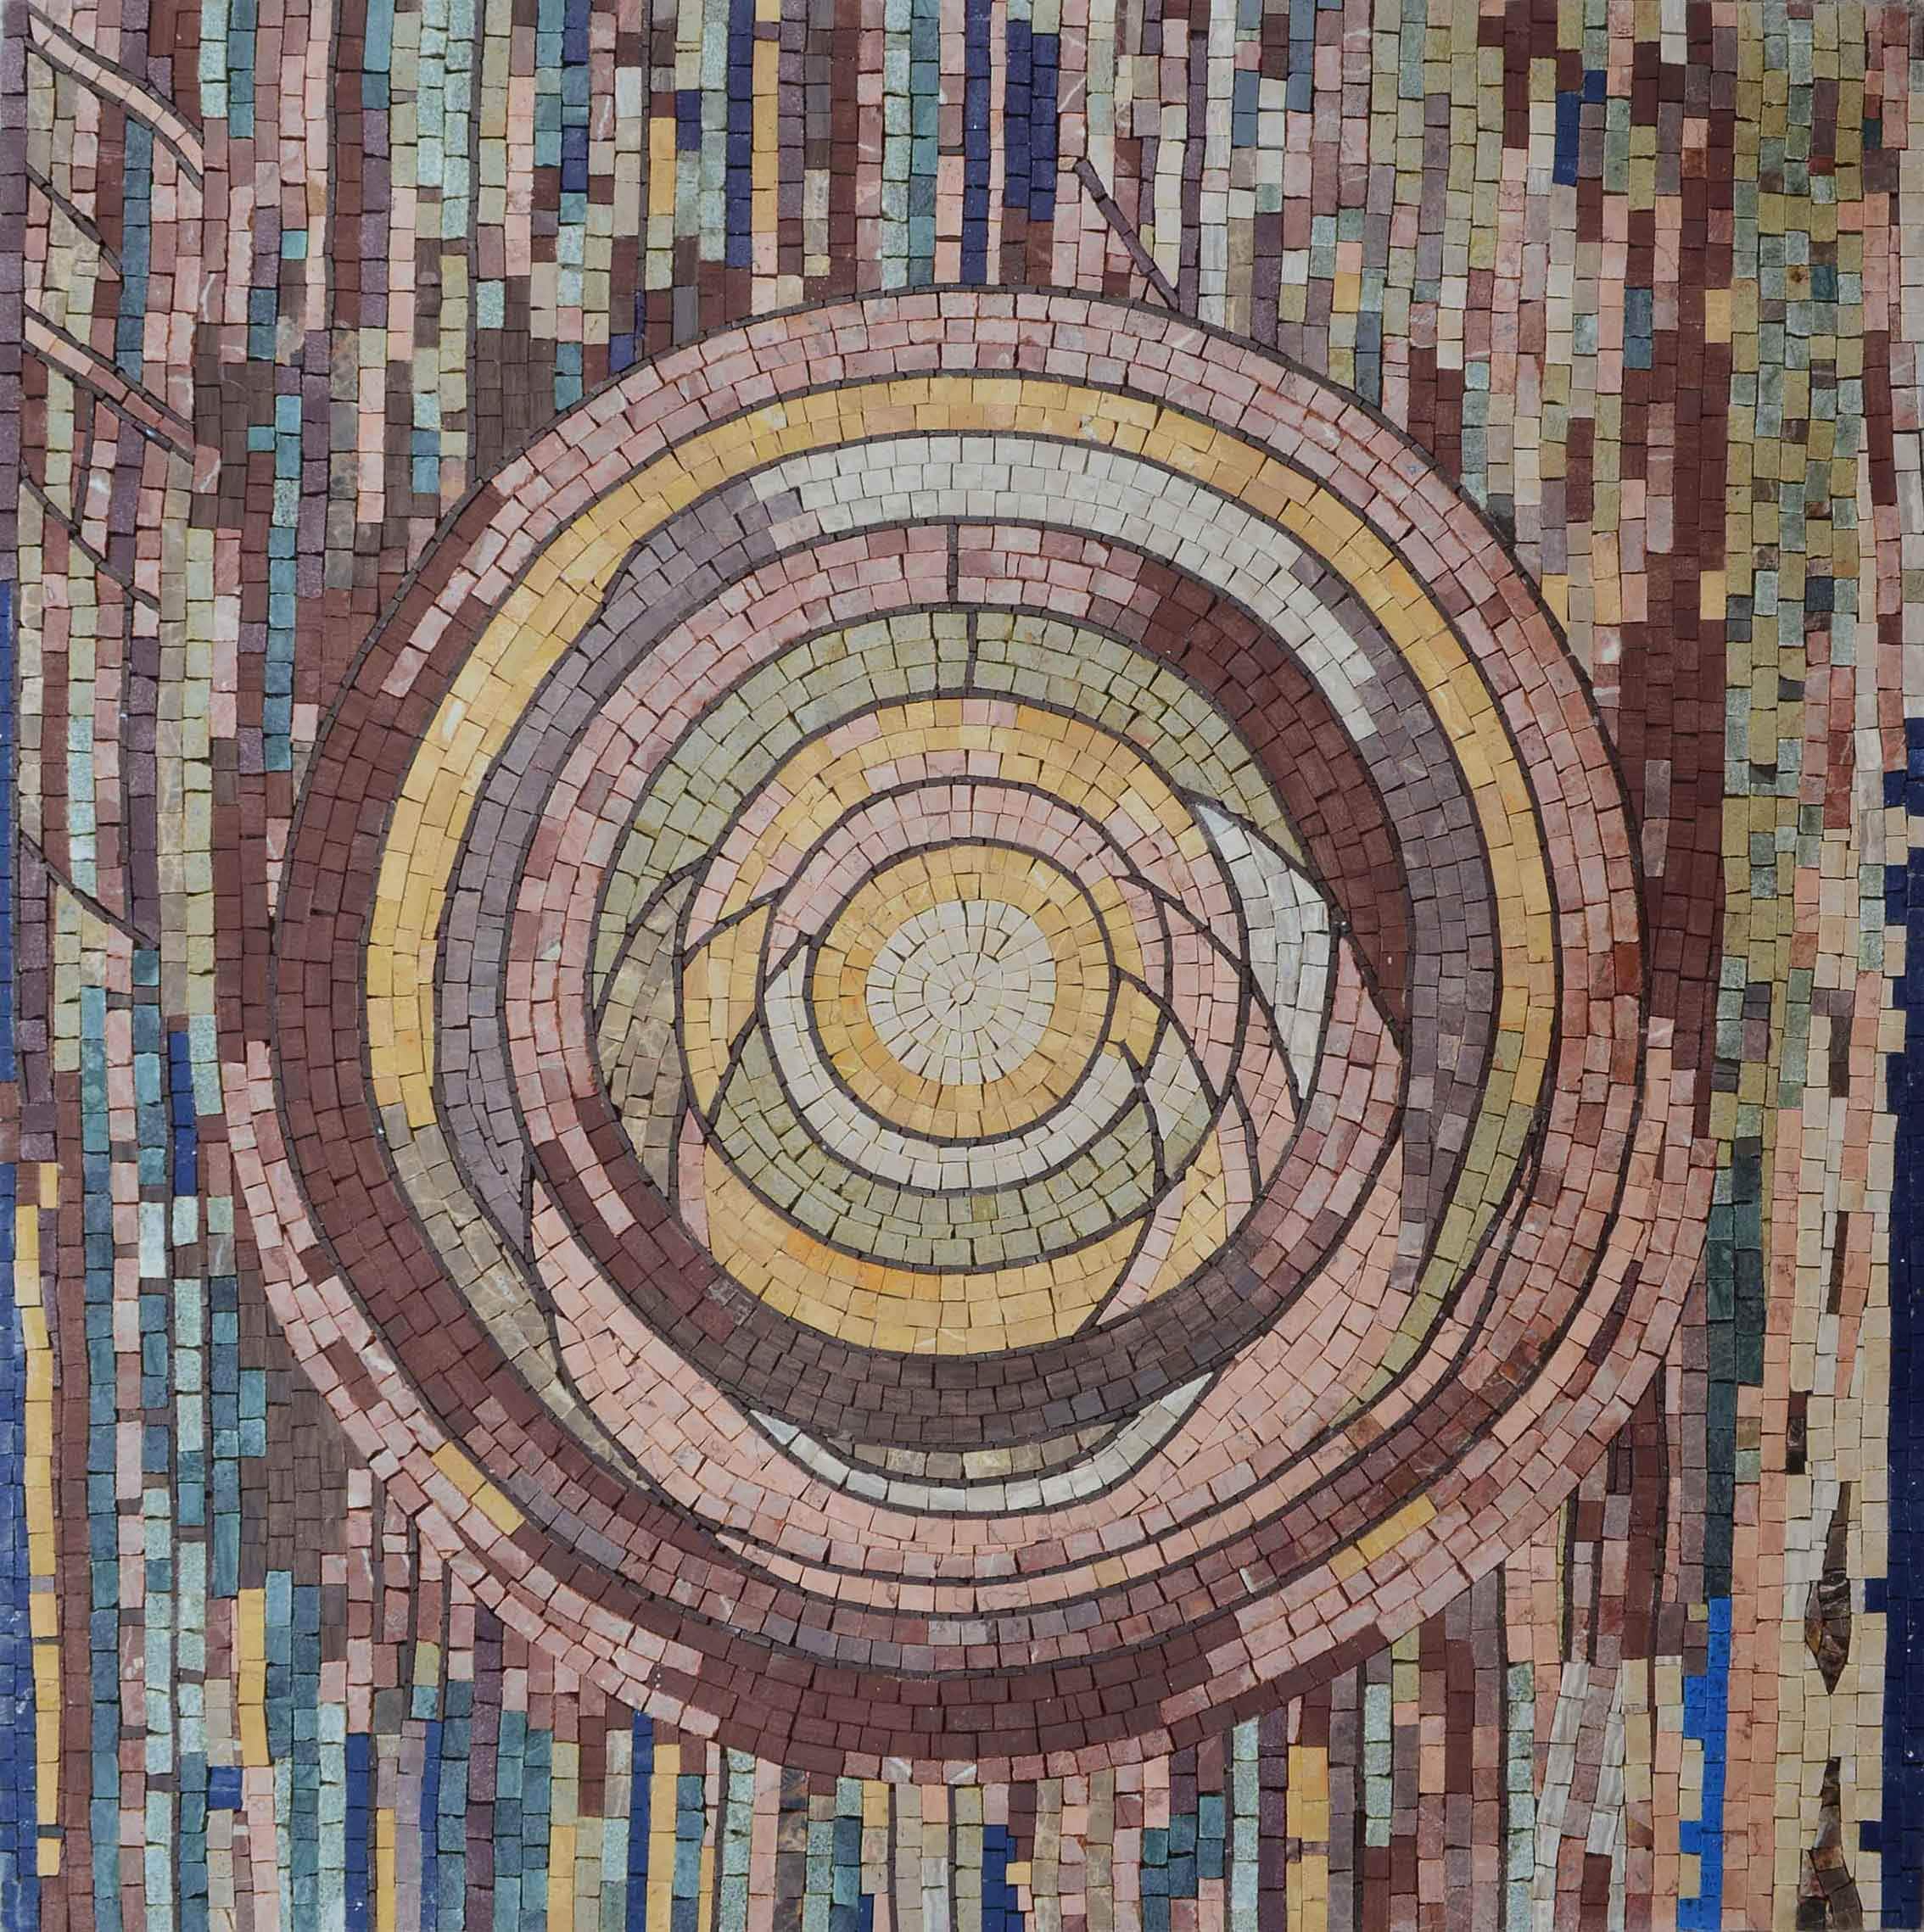 Abstract Design in Circles - Mosaic Art